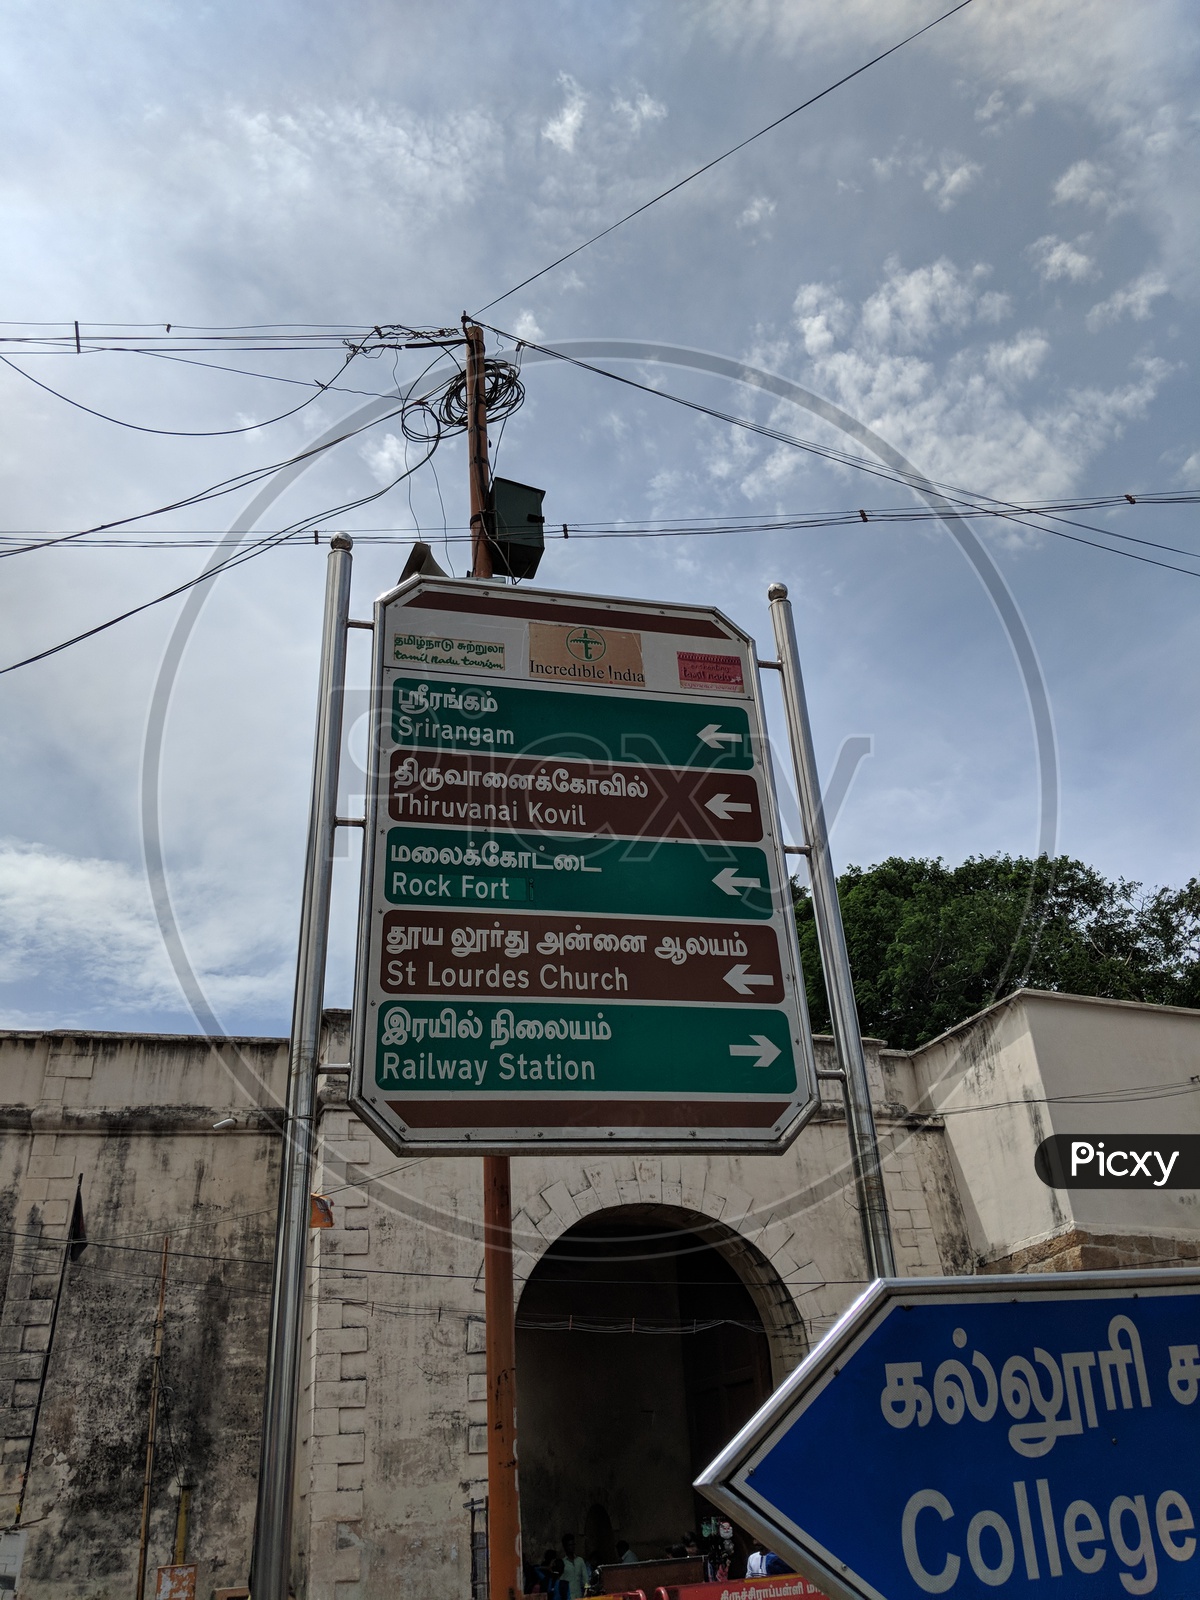 Road signages in Tiruchirapalli